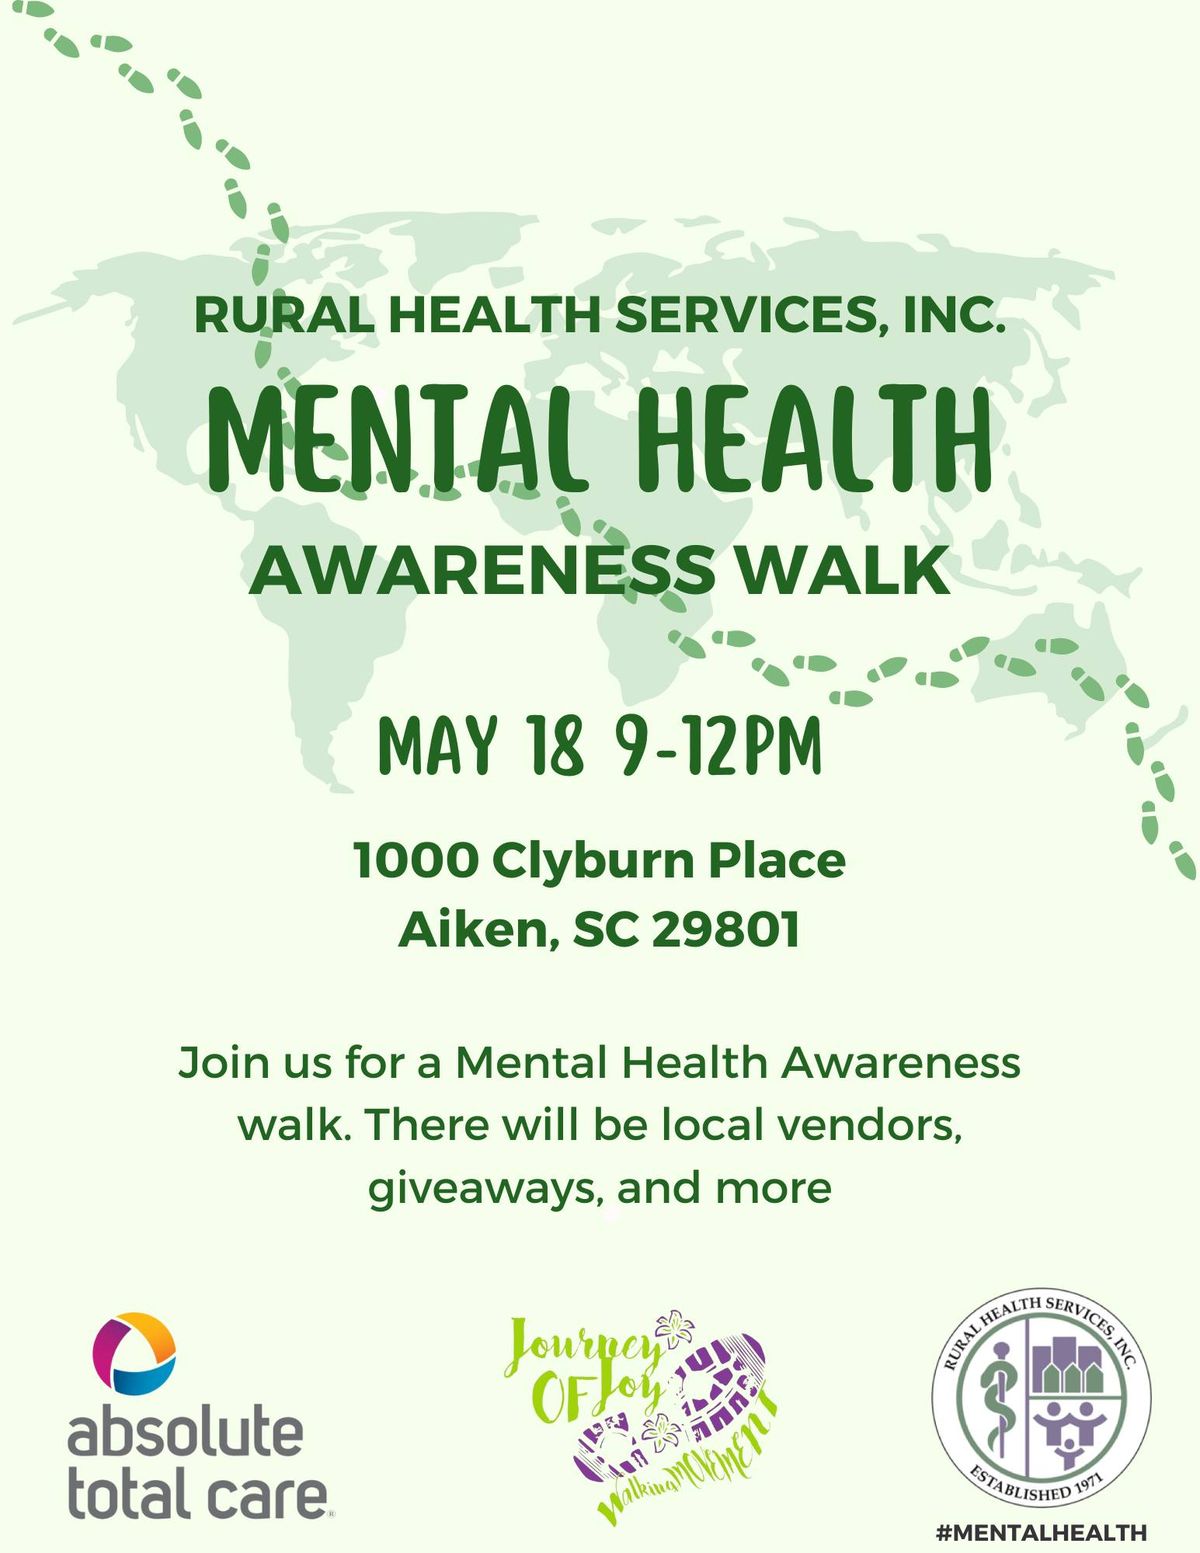 Rural Health Services, Inc. Mental Health Awareness Walk